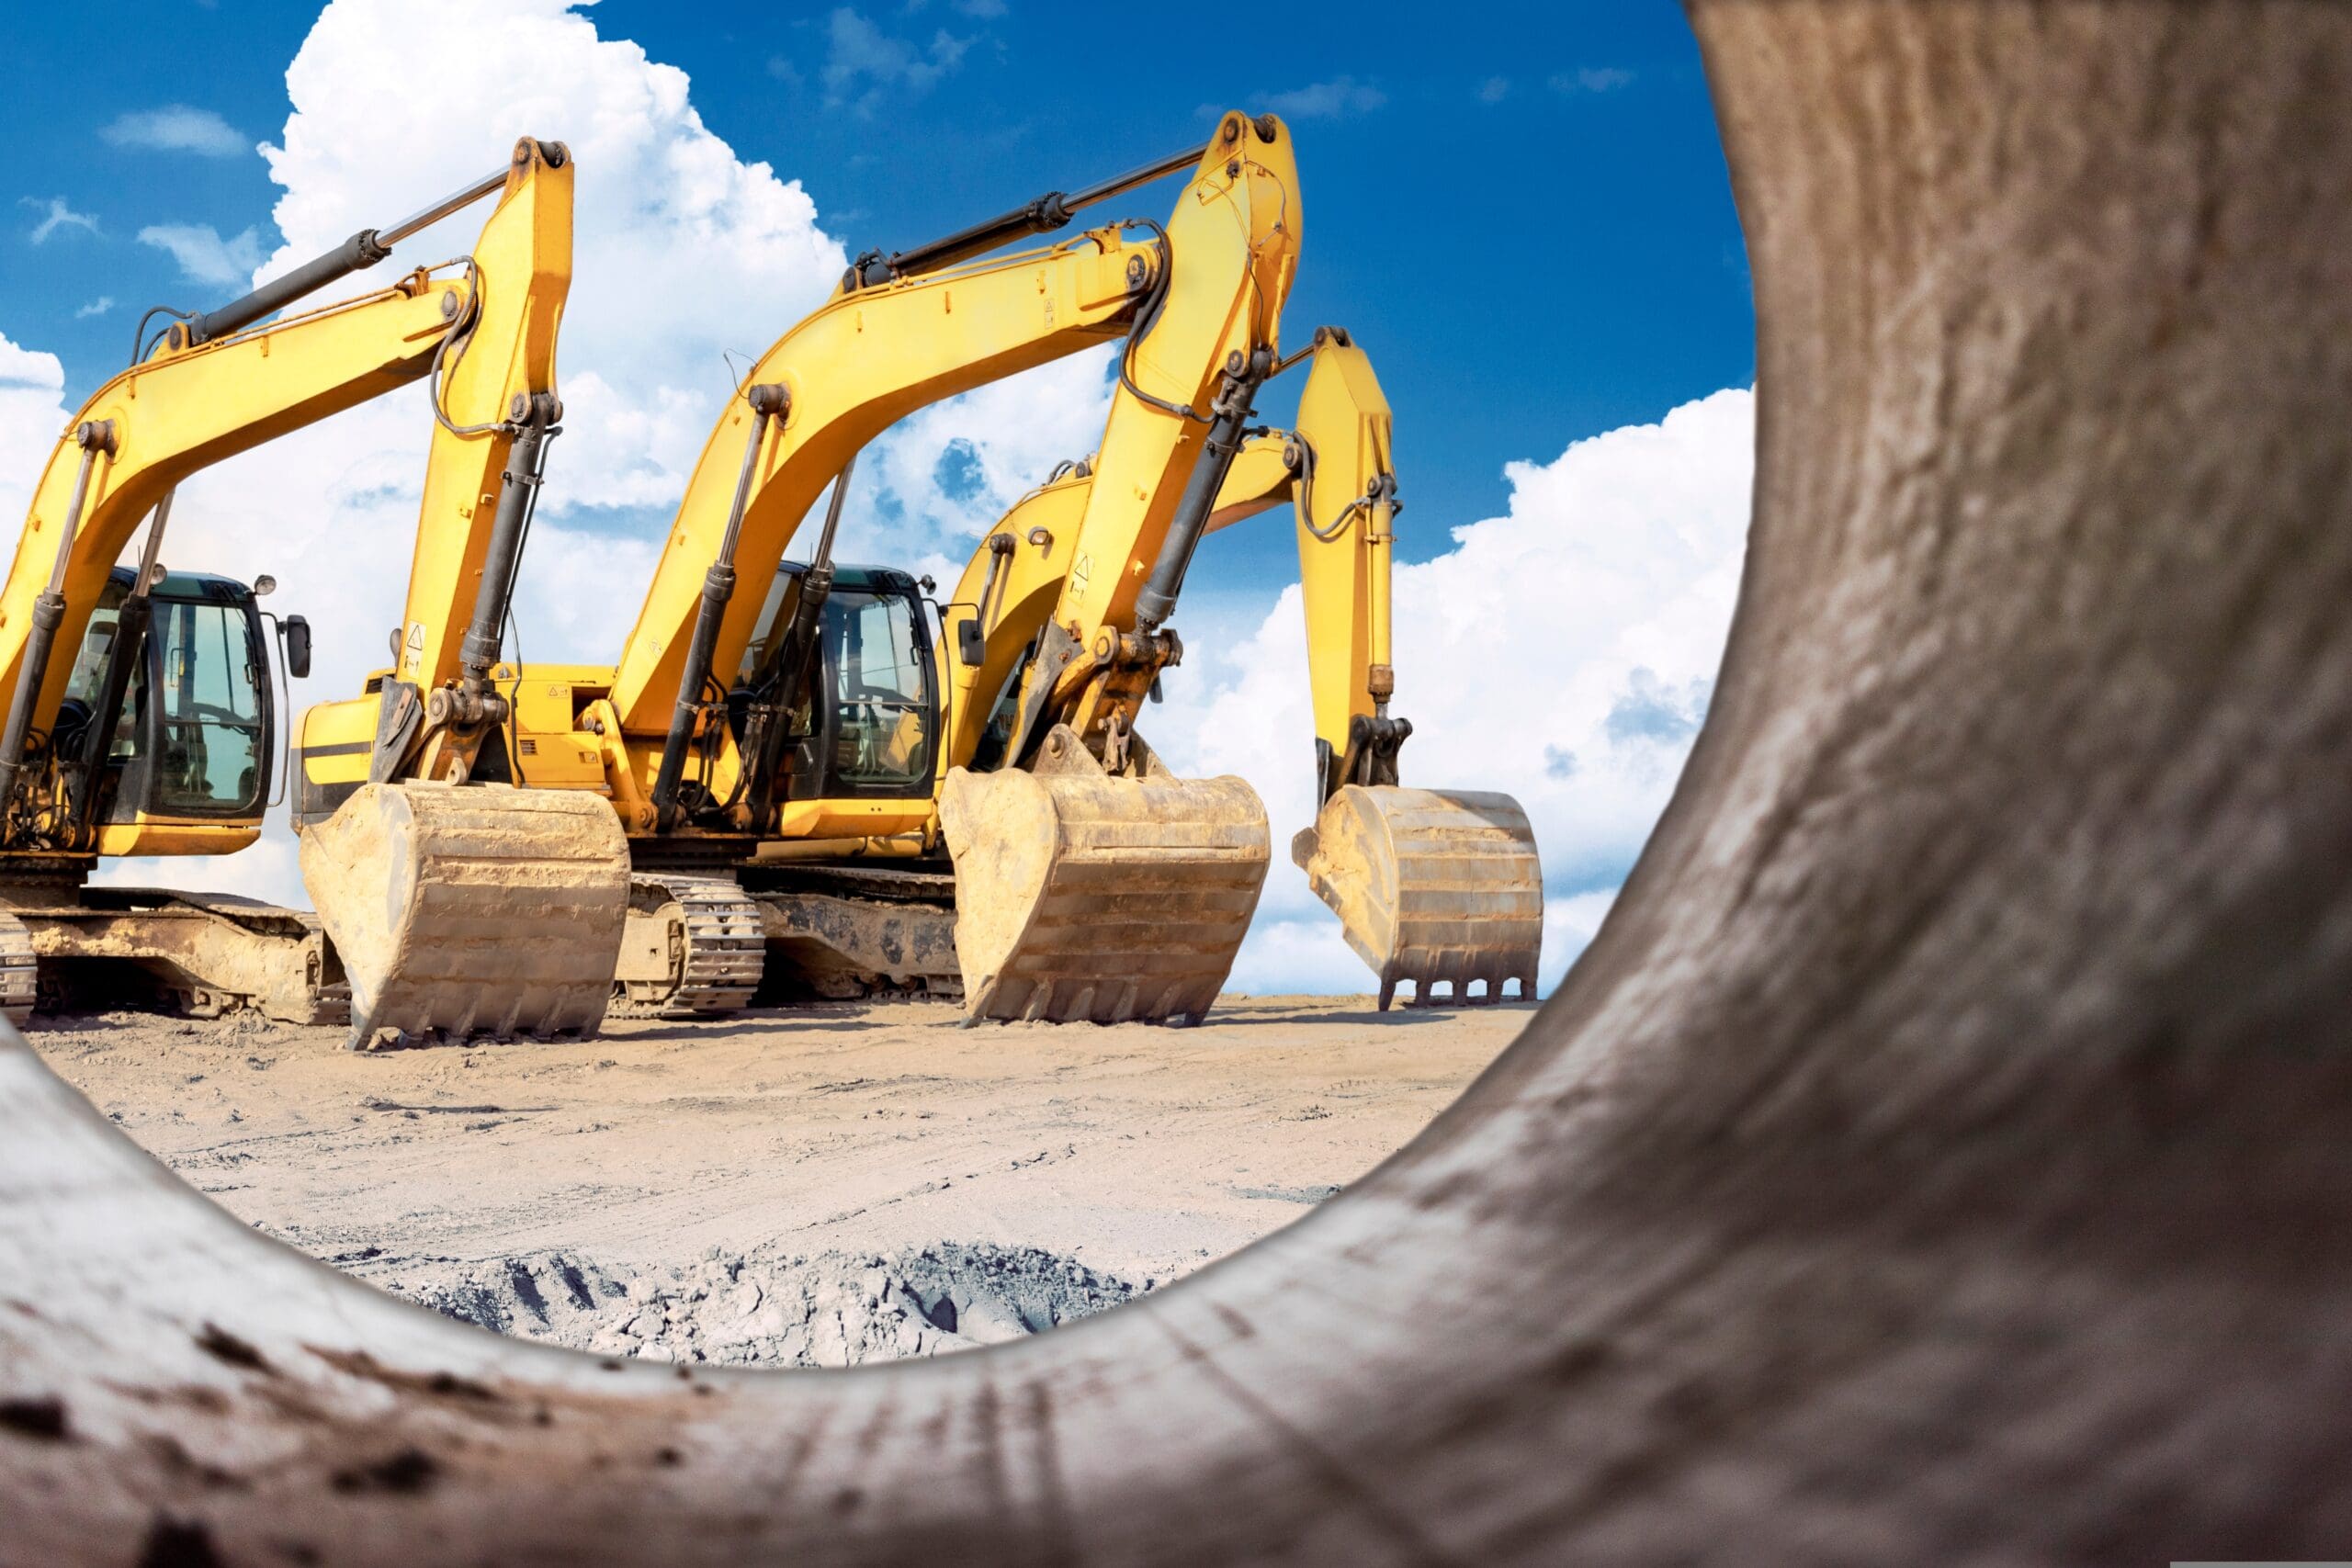 Powerful Excavators At A Construction Site